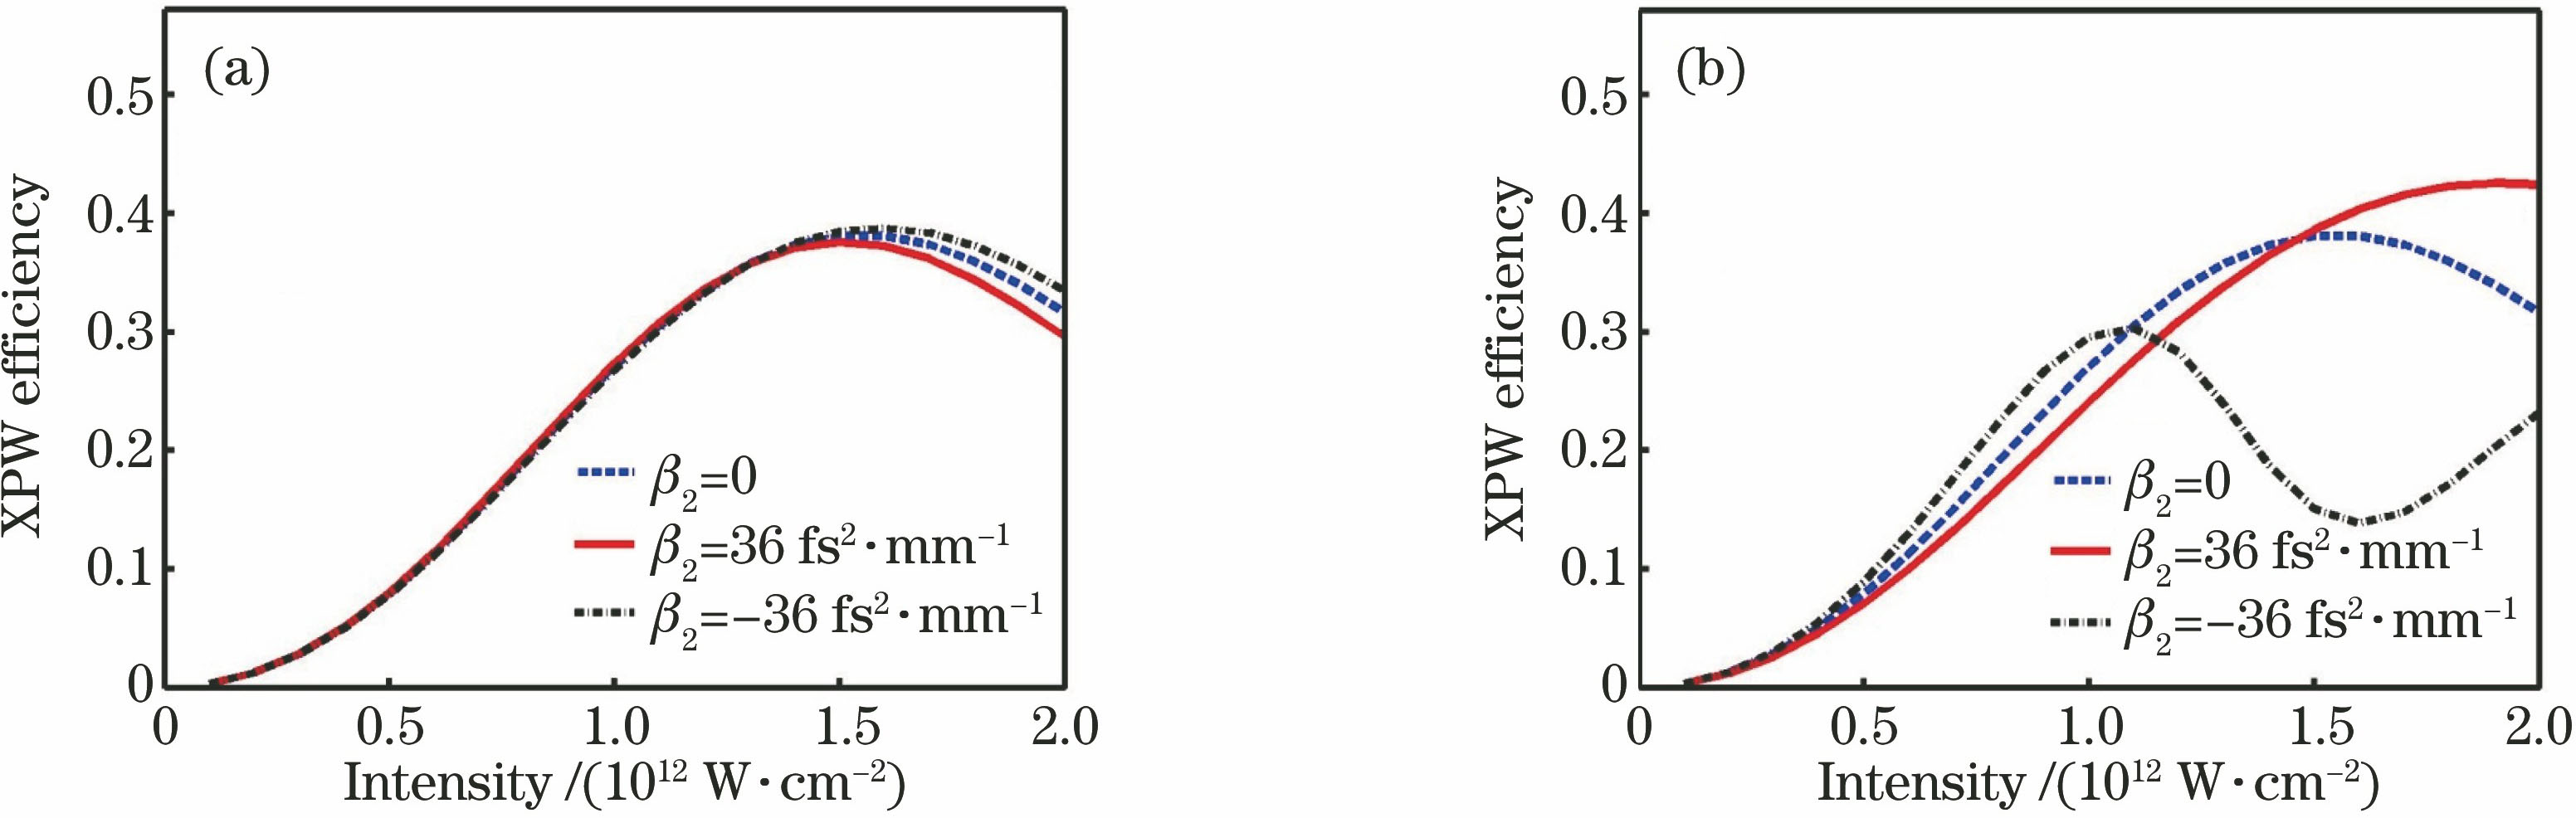 XPW conversion efficiency versus peak intensity of laser pulses. (a) τ=100 fs, β=22.5°; (b) τ=30 fs, β=22.5°